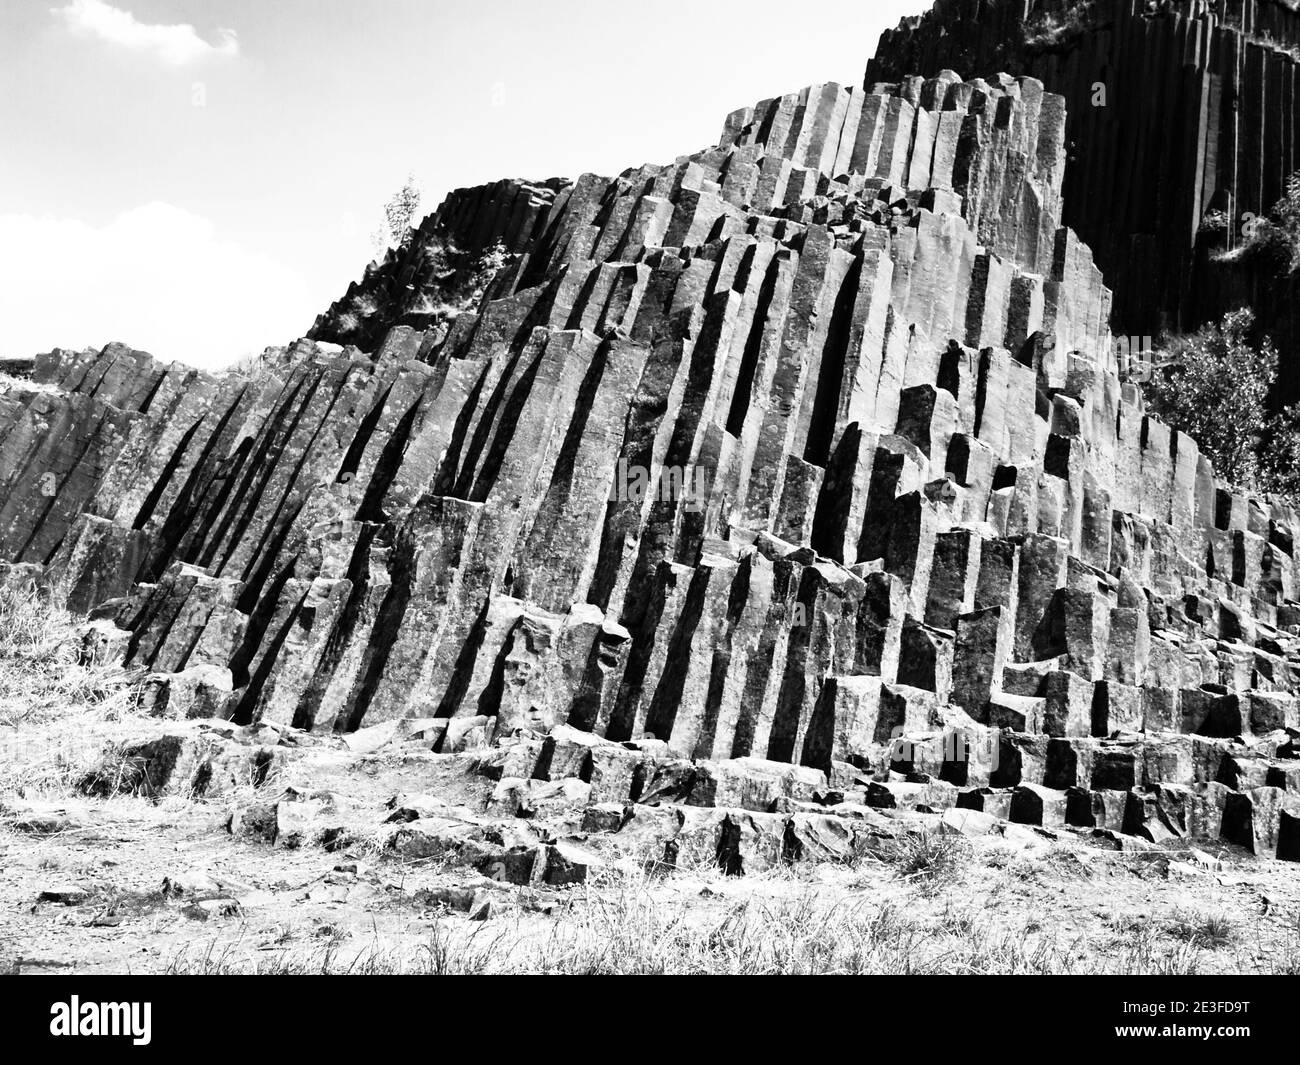 Unique basalt organ pipes rock formation of Panska skala near Kamenicky Senov in Northern Bohemia, Czech Republic, Europe. Black and white image. Stock Photo